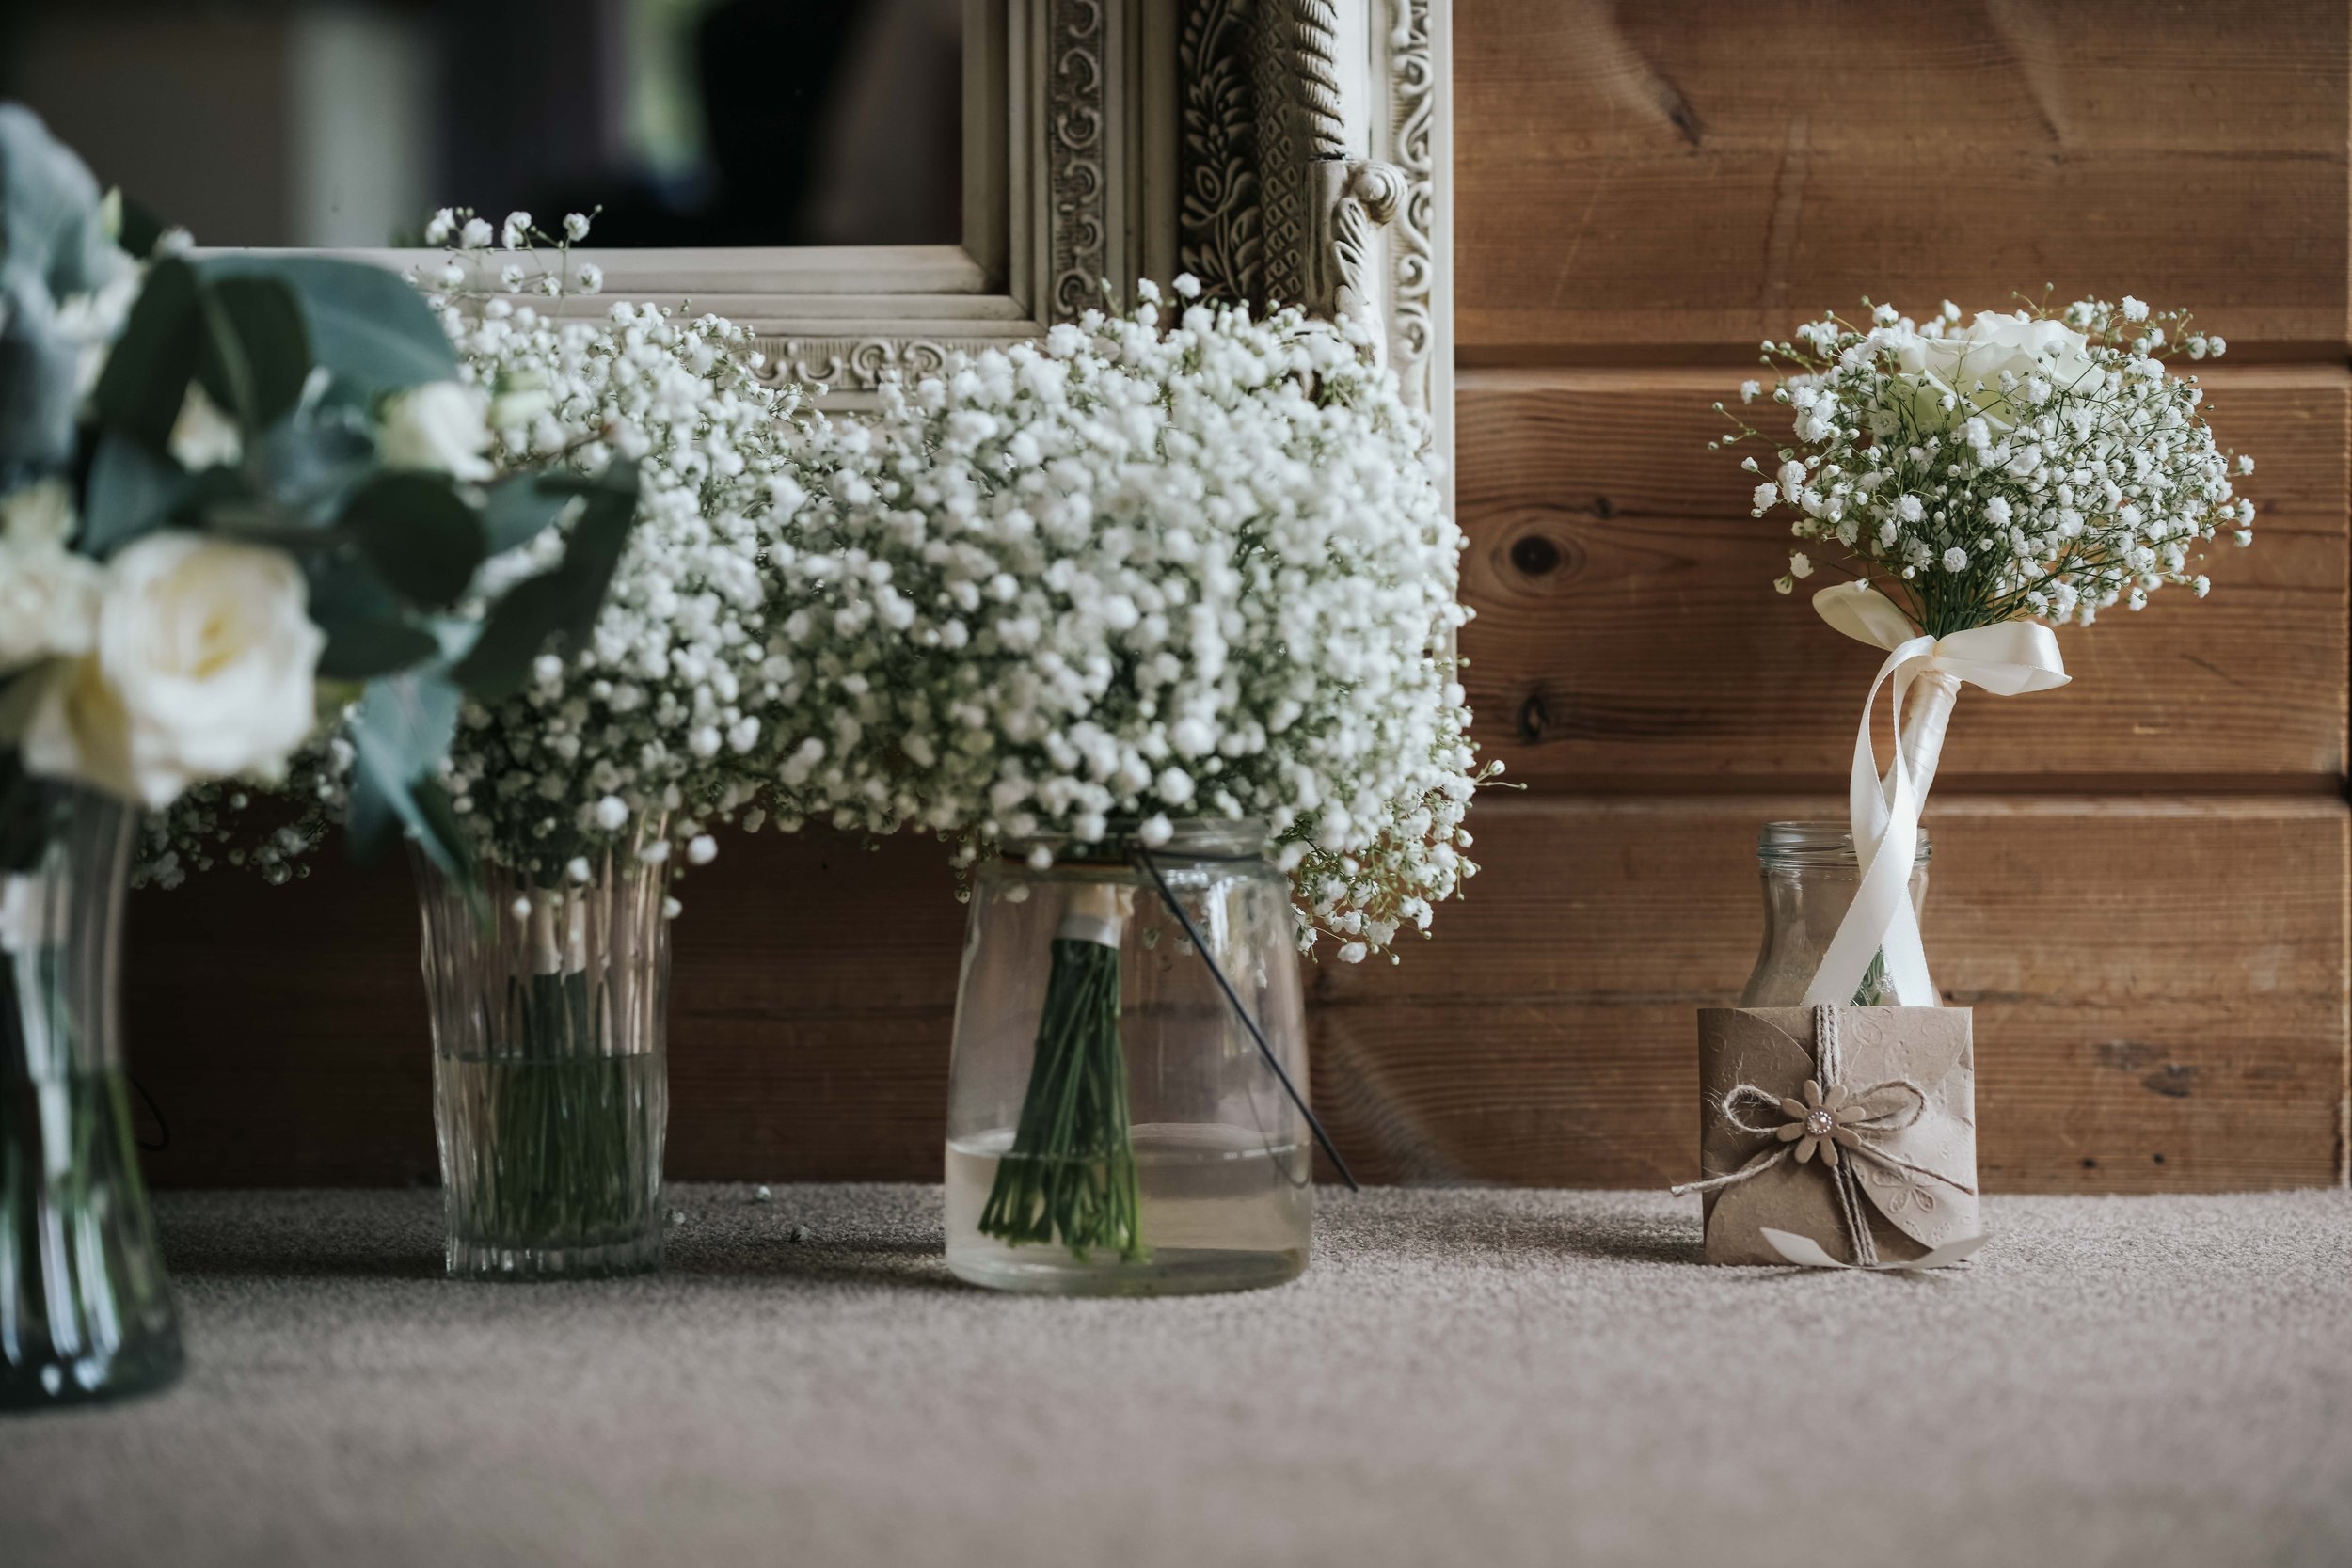 Styal Lodge wedding photography cheshire - 002.jpg